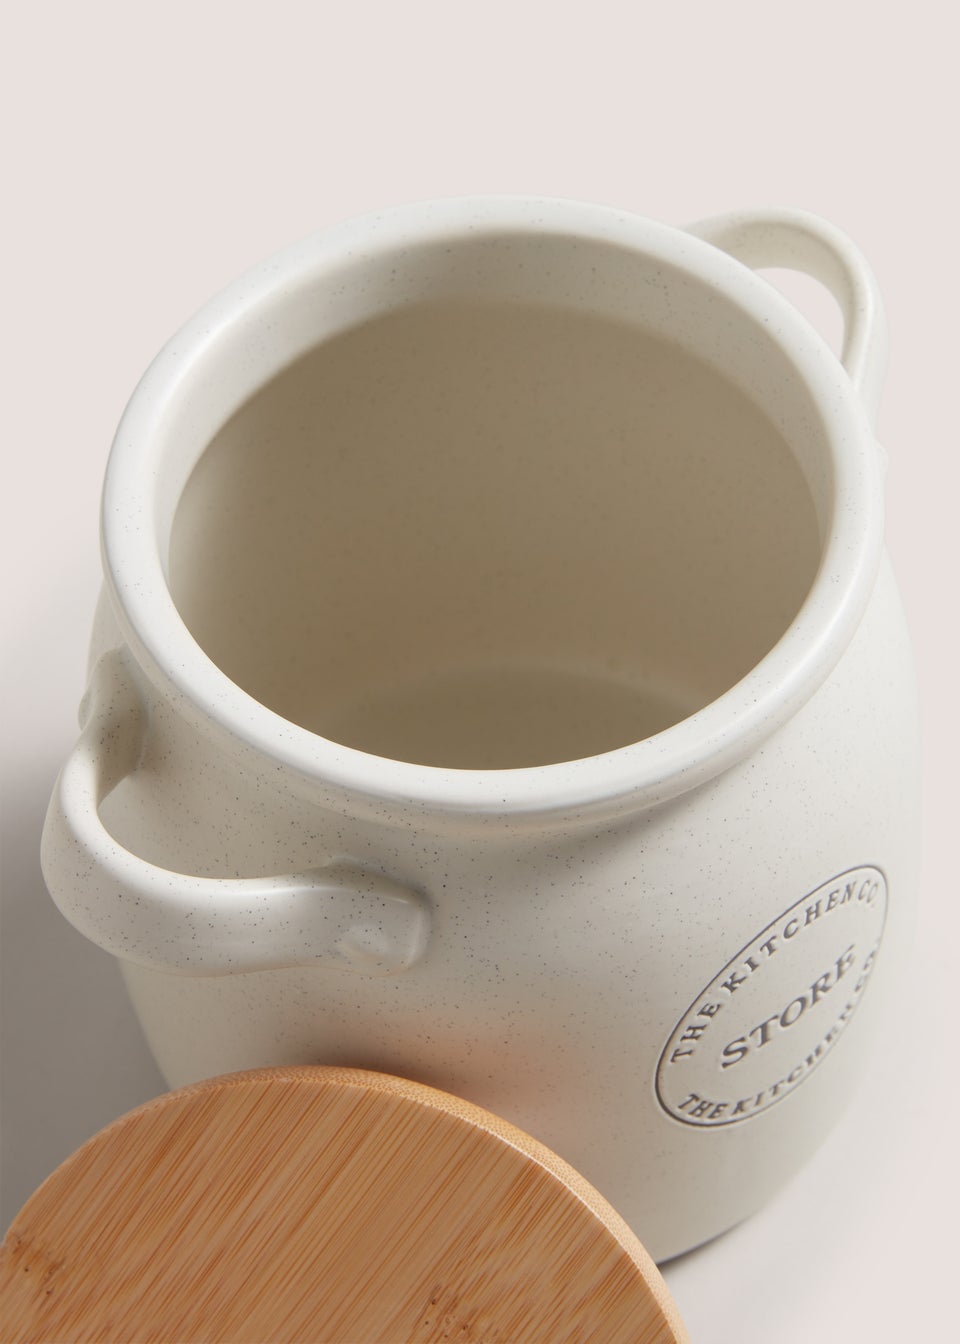 Kitchen Co Ceramic Store Jar (18cm x 14.5cm)